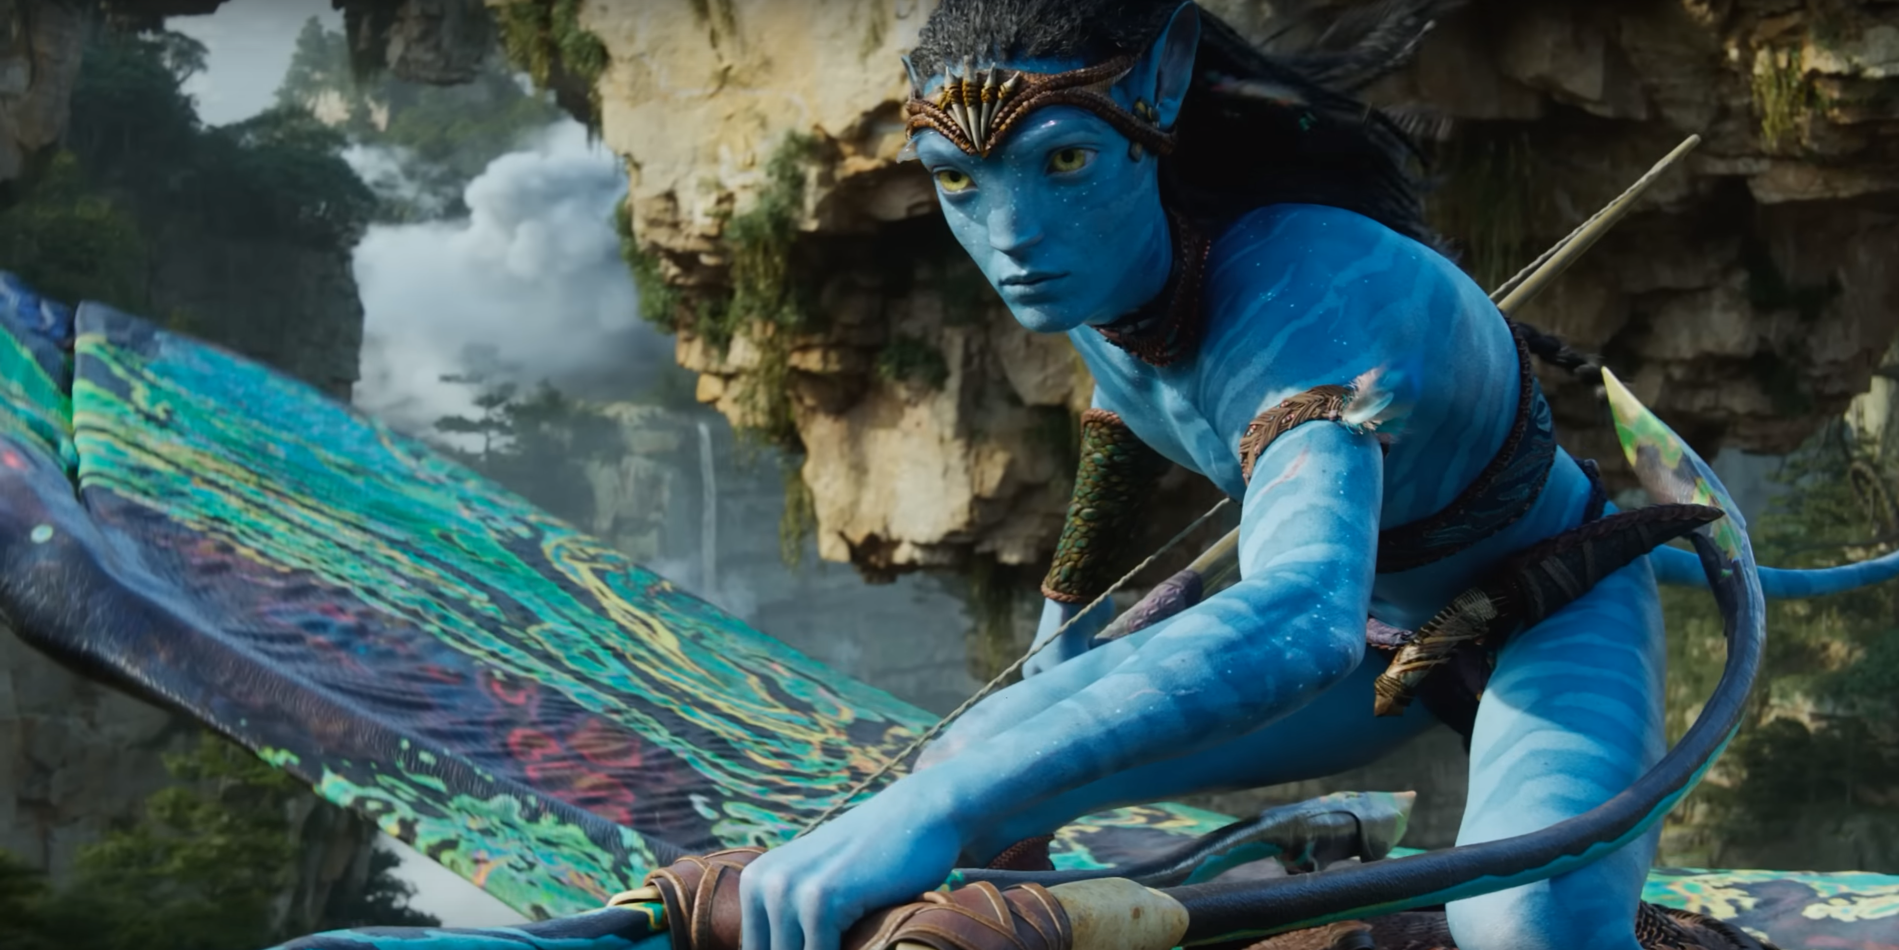 Neteyam Avatar 2 Cast Returning In Avatar 3